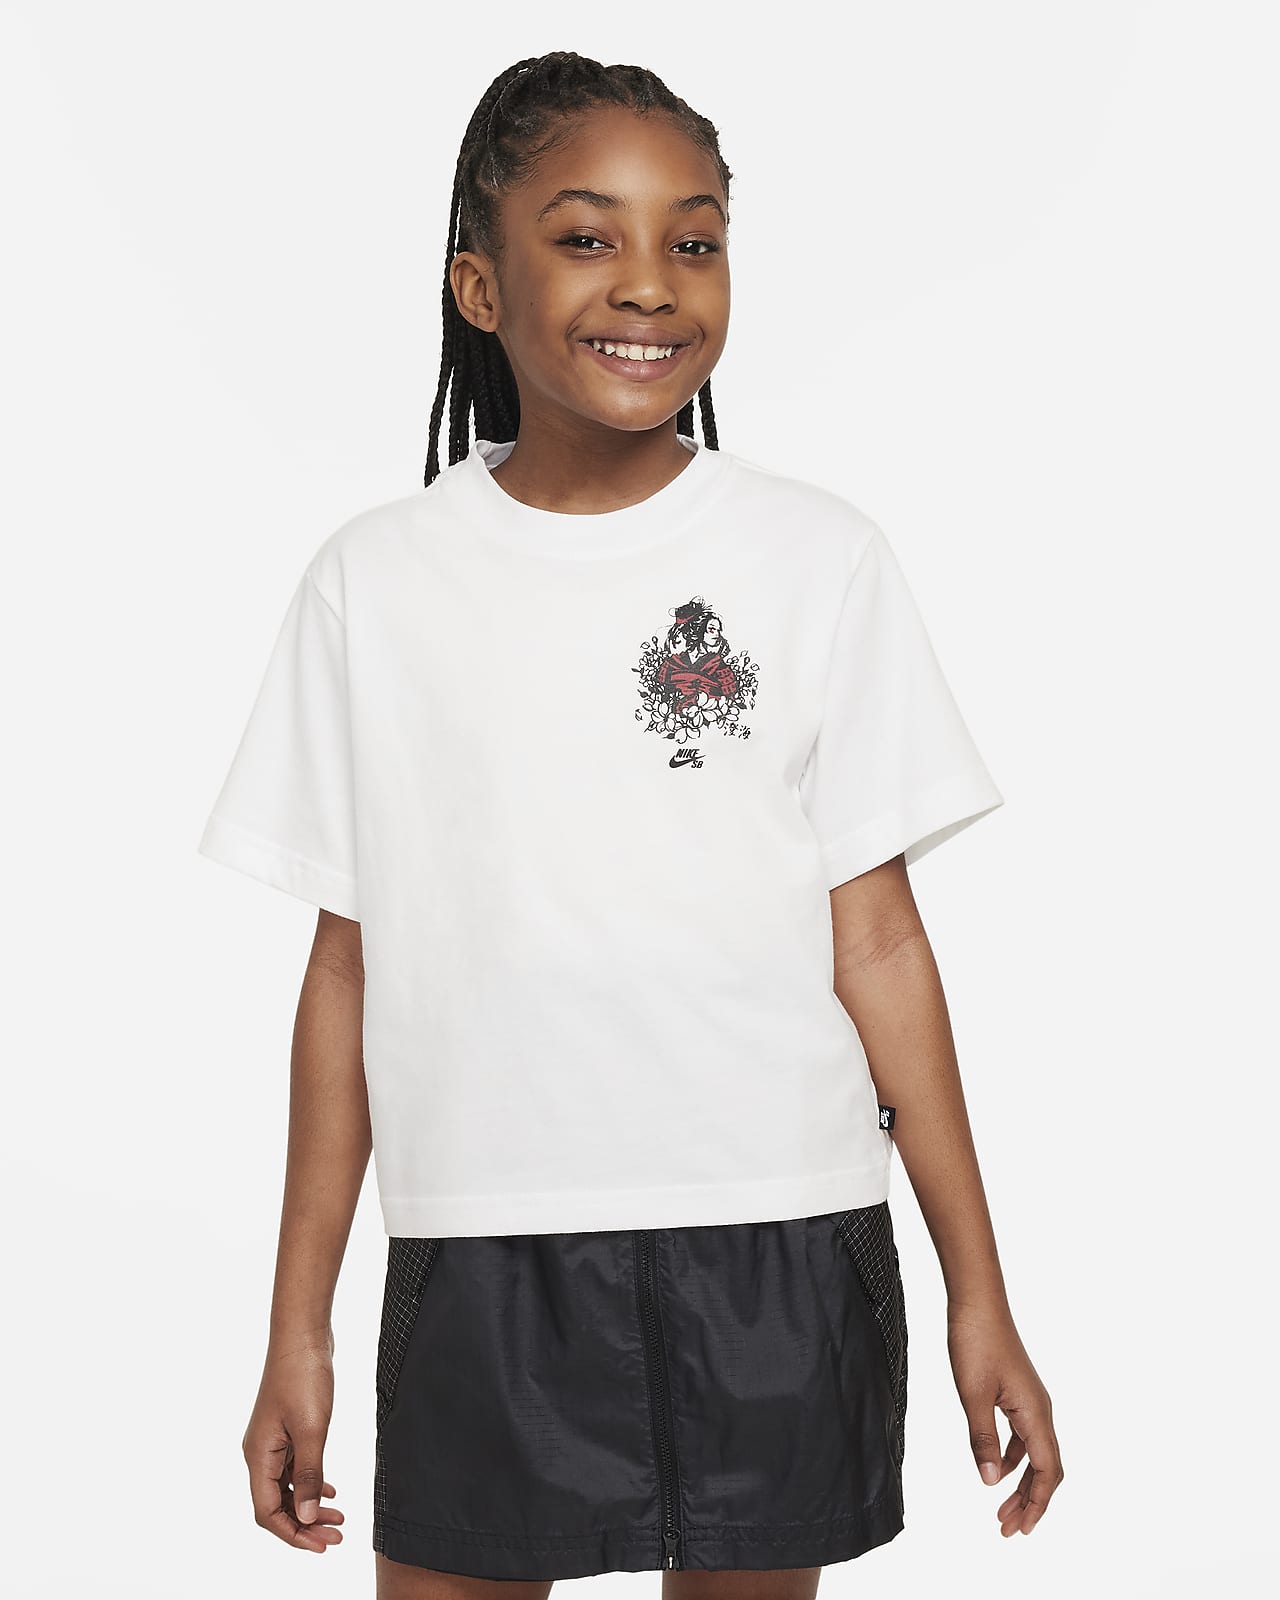 Sky Brown x Nike SB Big Kids' (Girls') Skate T-Shirt